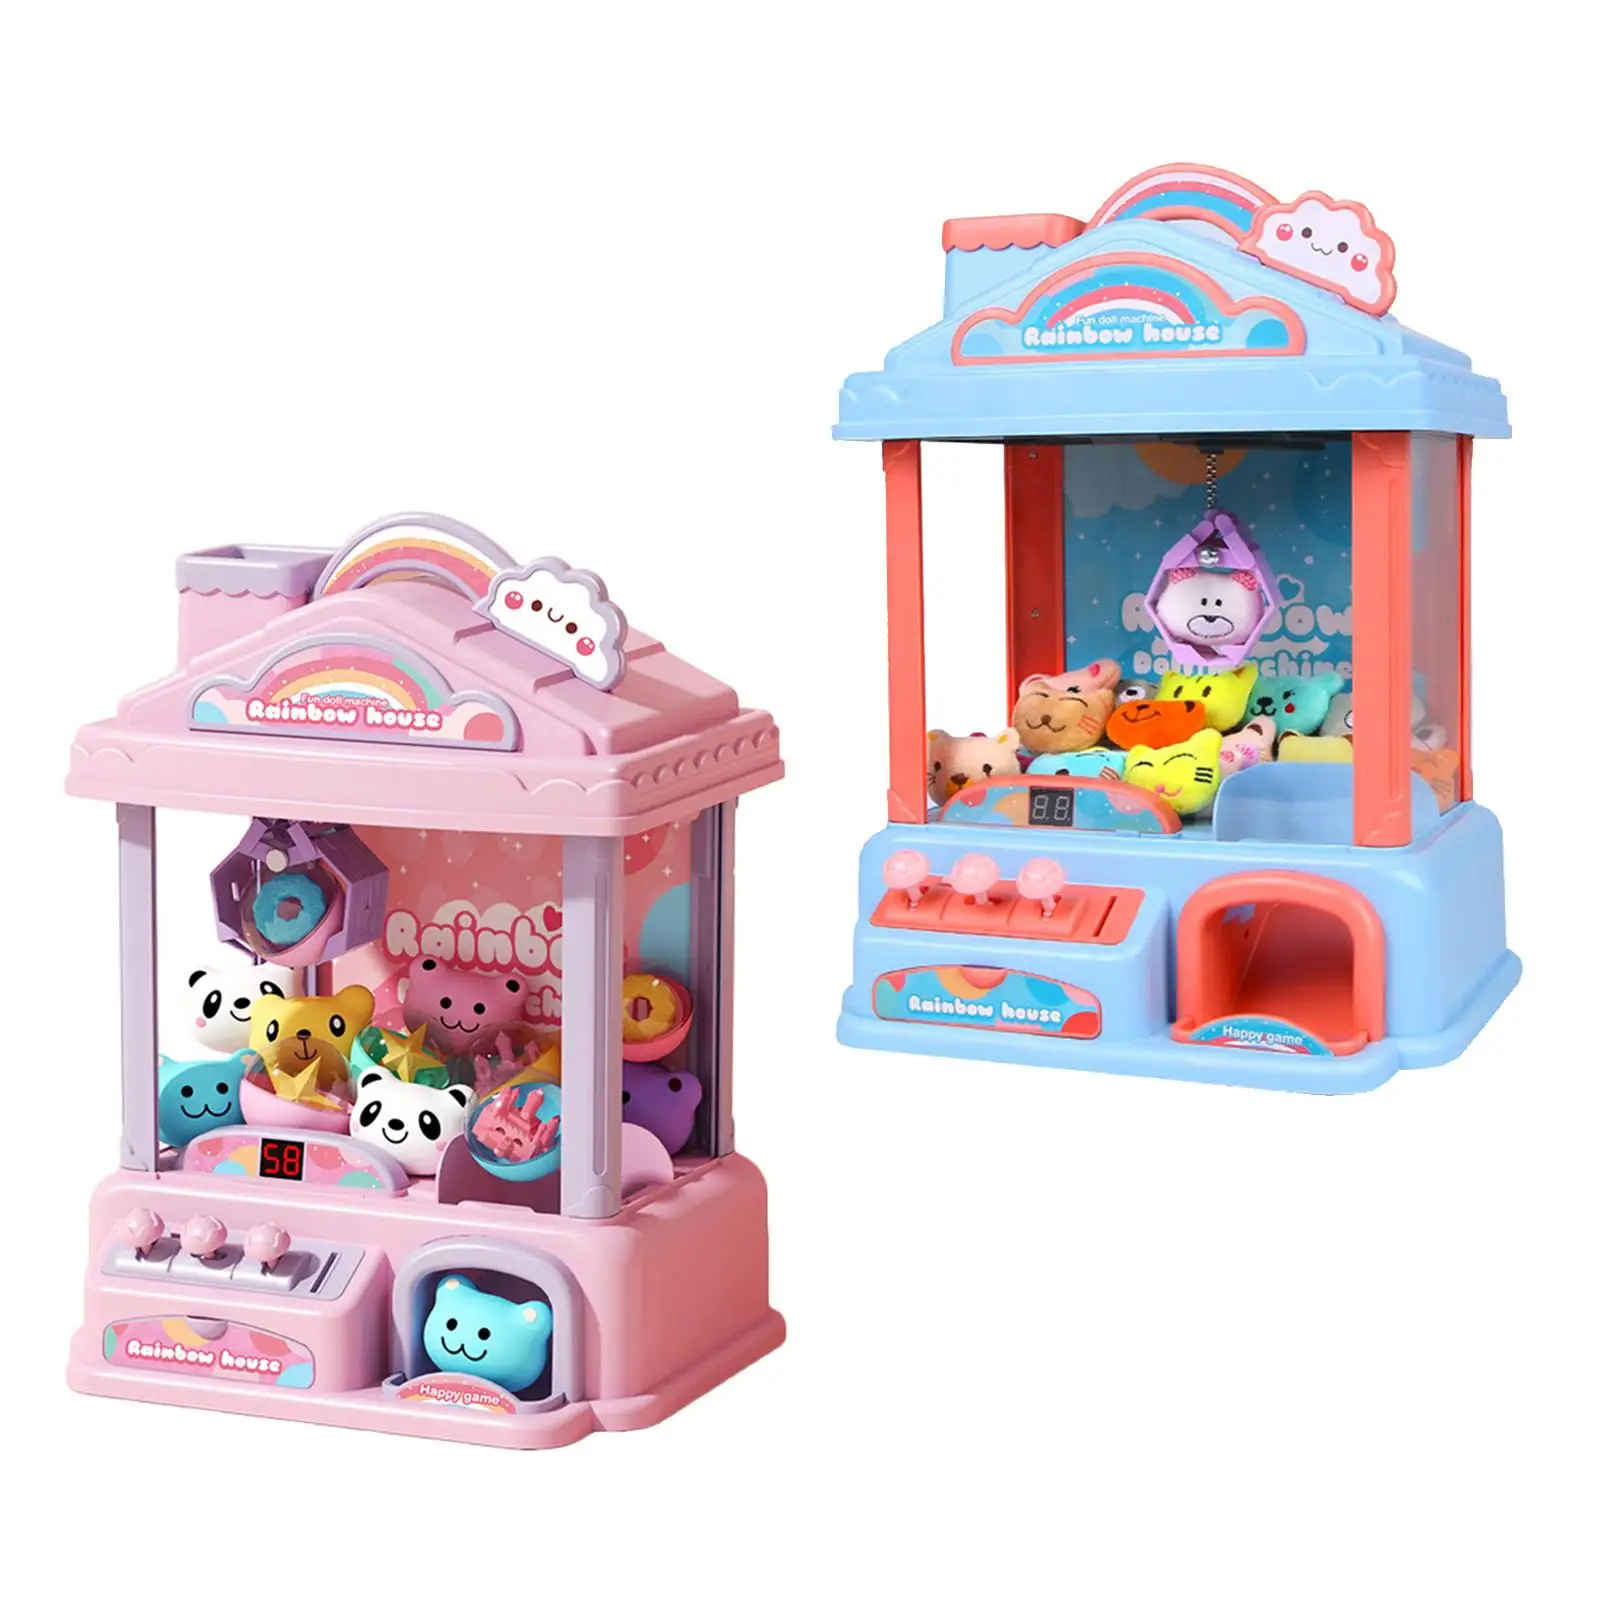 Claw Machine Arcade Game Mini Vending Machine with 20 Mini Plush Animals for Boys Girls 3-6 Years Old Kid Children Best Gifts